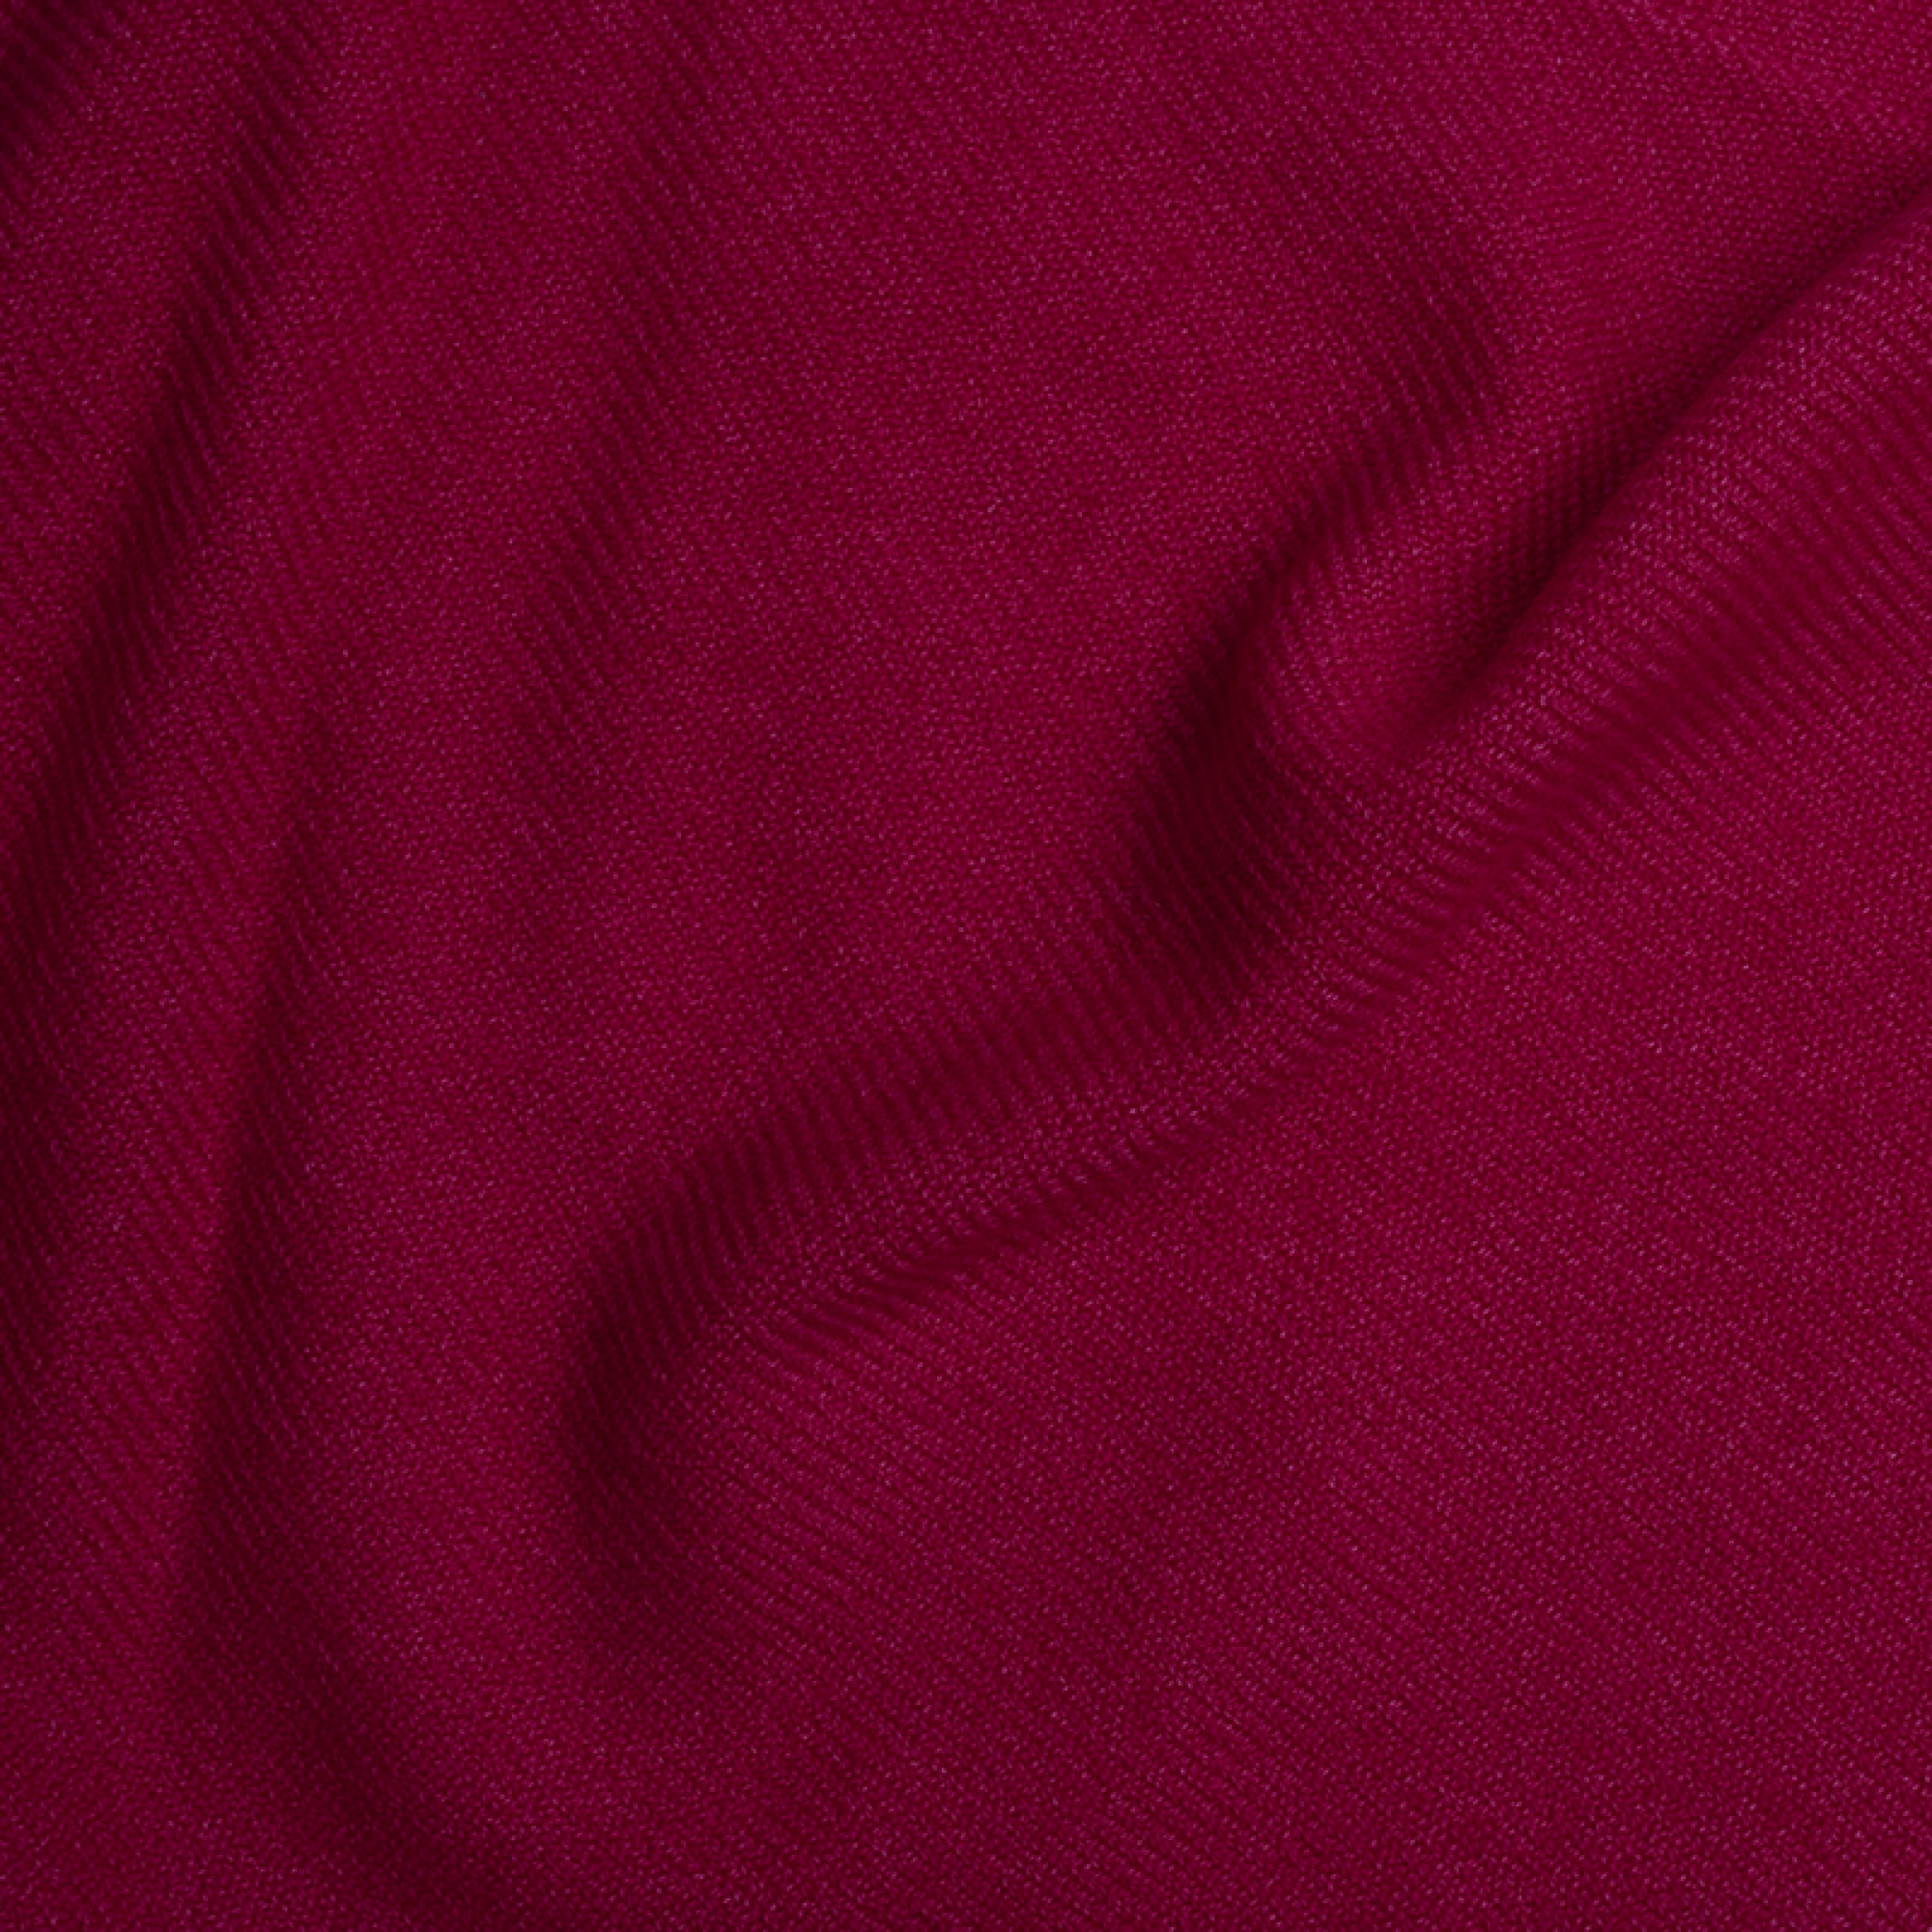 Cashmere accessories blanket frisbi 147 x 203 bright rose 147 x 203 cm